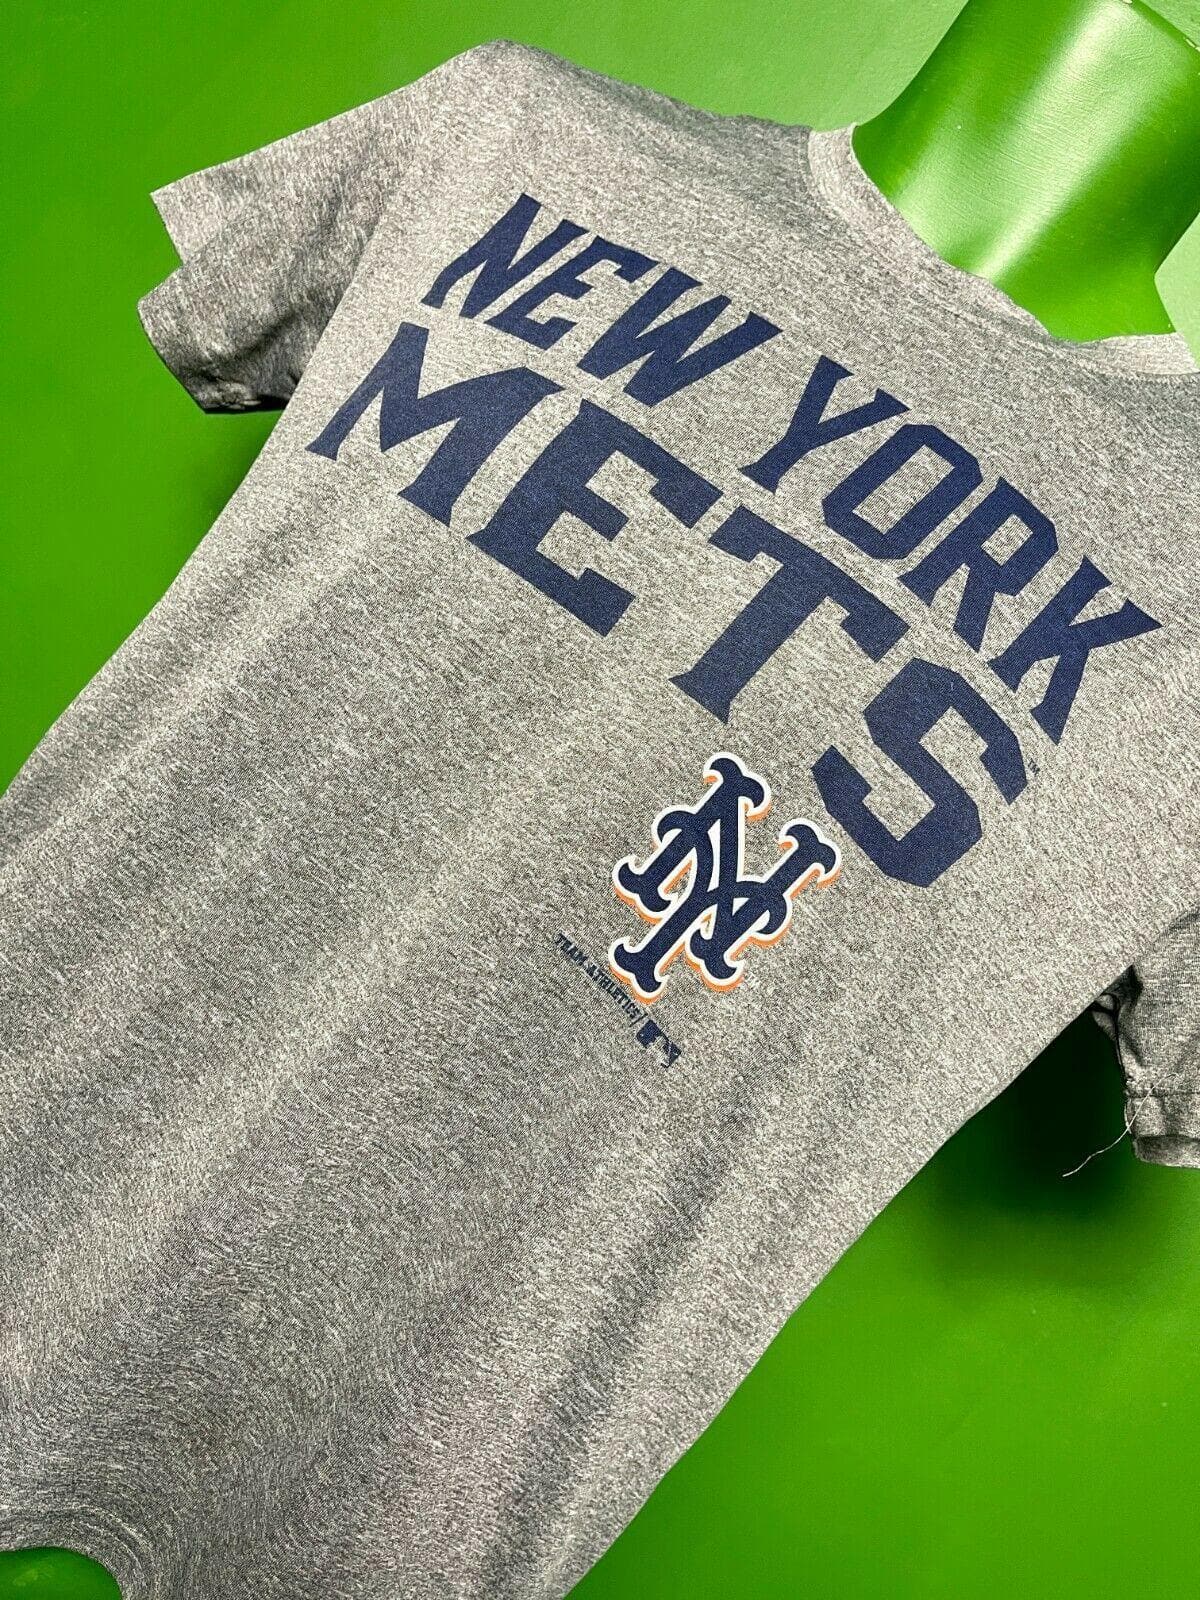 MLB New York Mets Heathered Grey T-Shirt Youth Medium 10-12